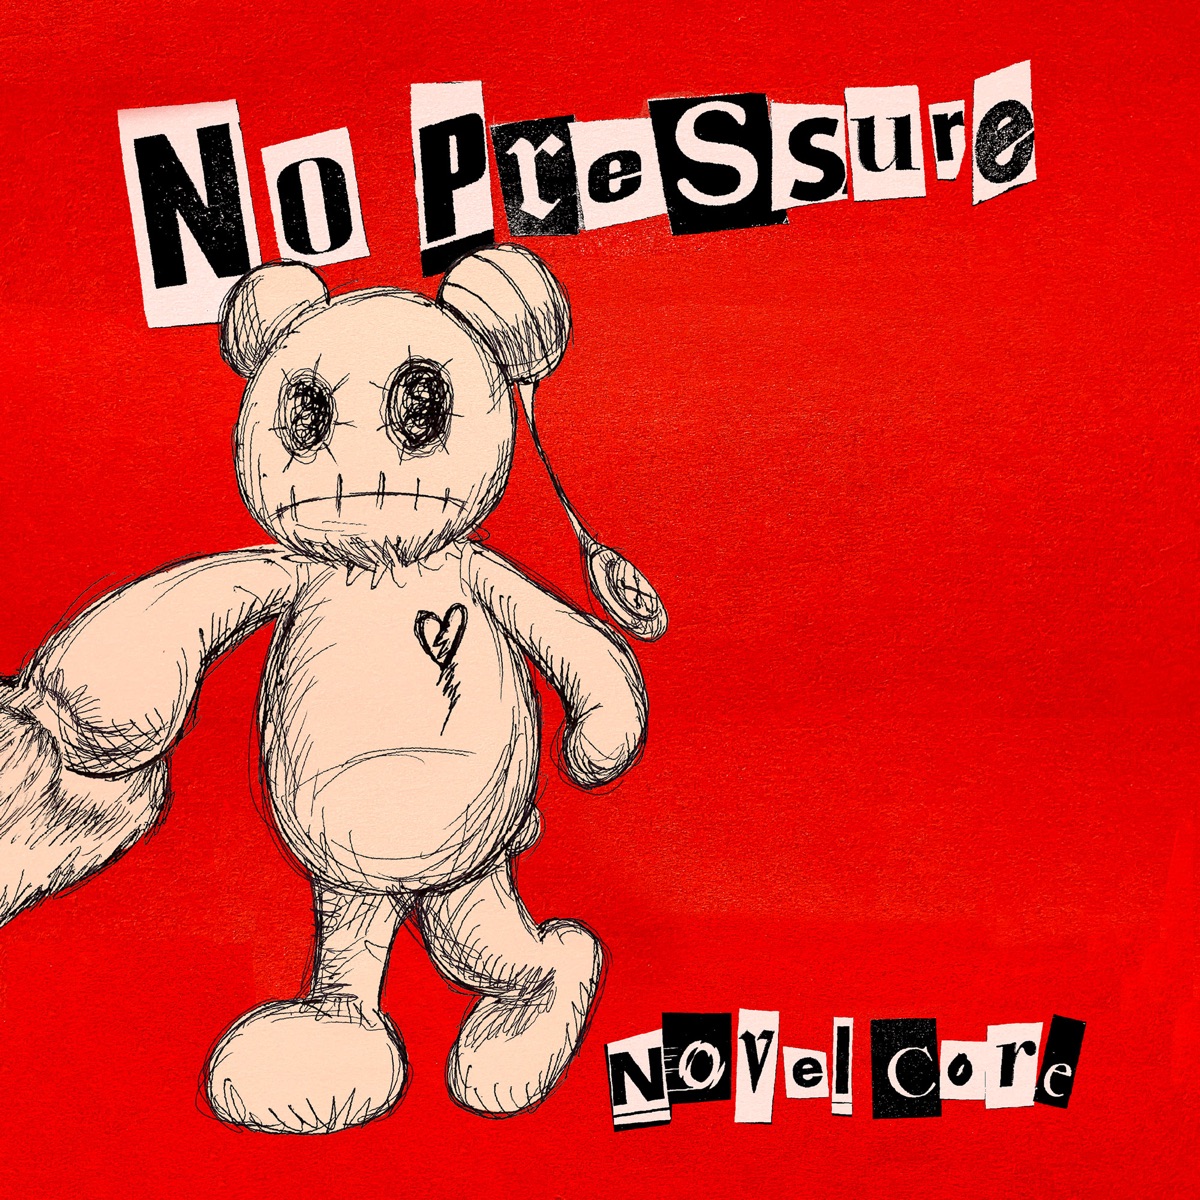 『Novel Core - 独創ファンタジスタ 歌詞』収録の『No Pressure』ジャケット